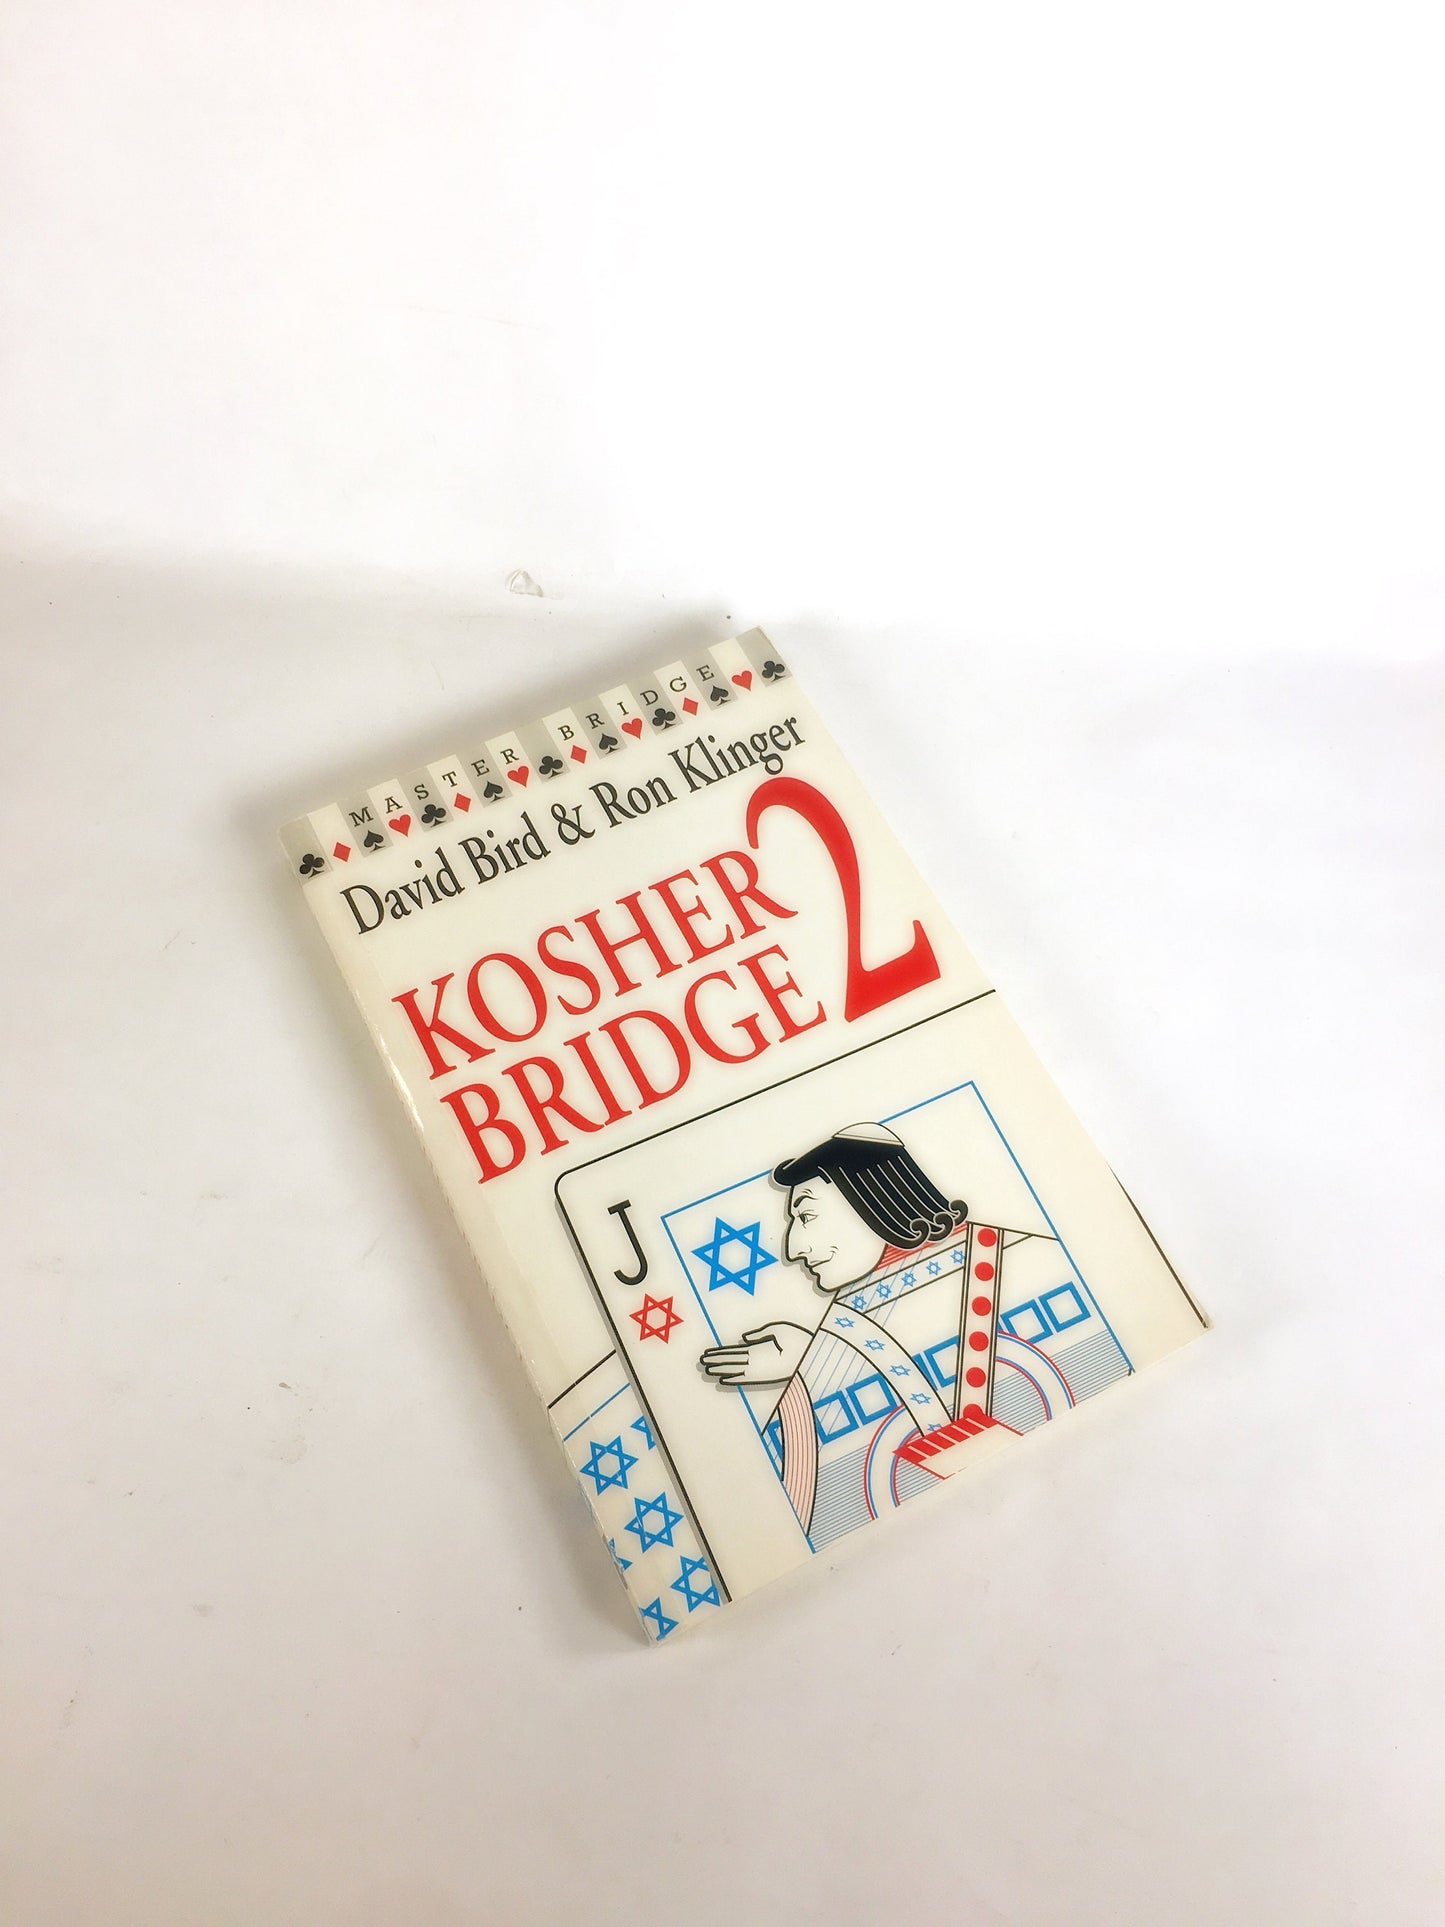 Kosher Bridge 2 by David Bird and Ron Klinger circa 1994. Vintage paperback book. Entertaining & instructive guide to improve your game.